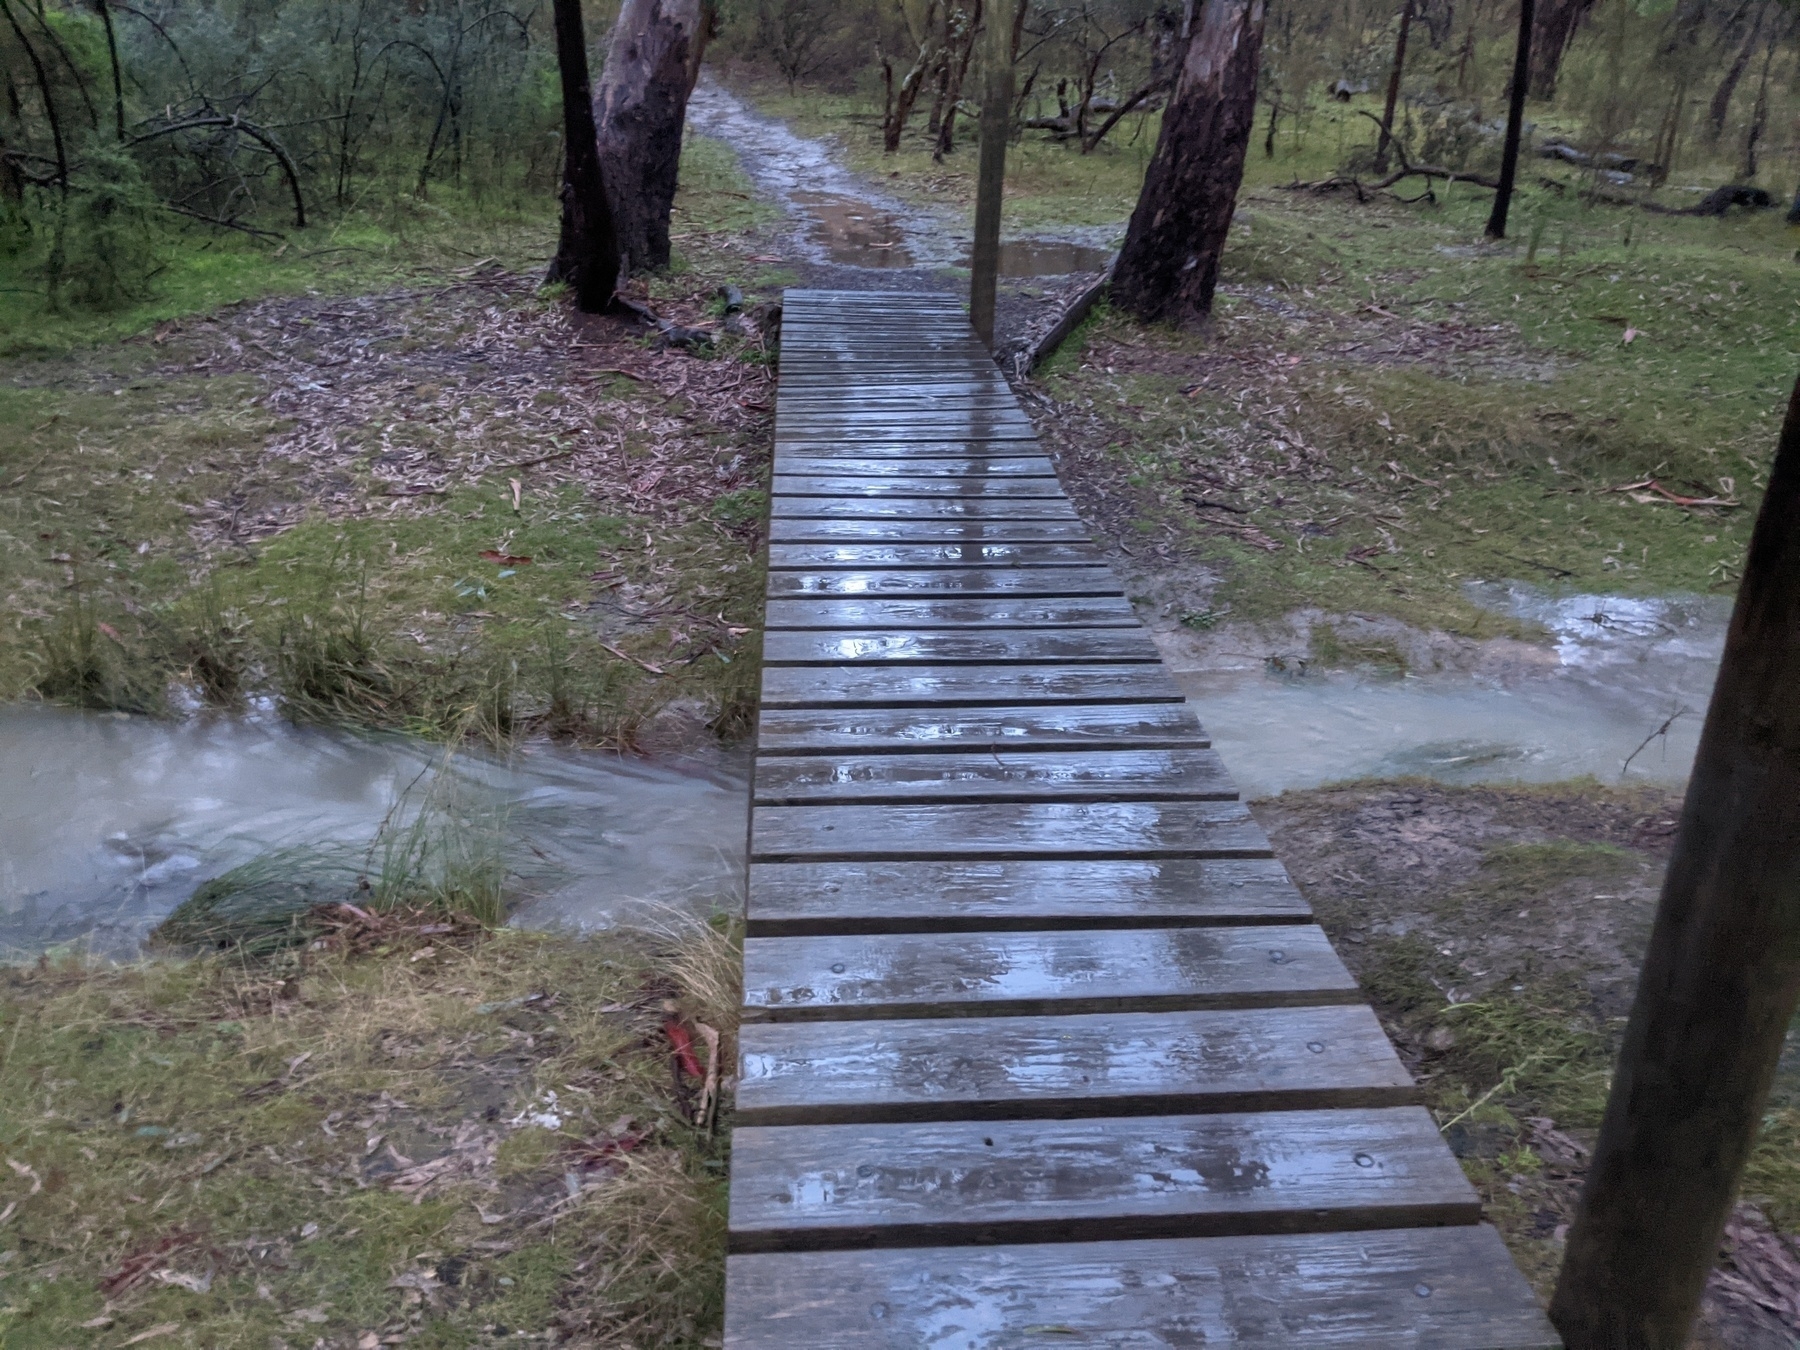 A foot-bridge over a stream